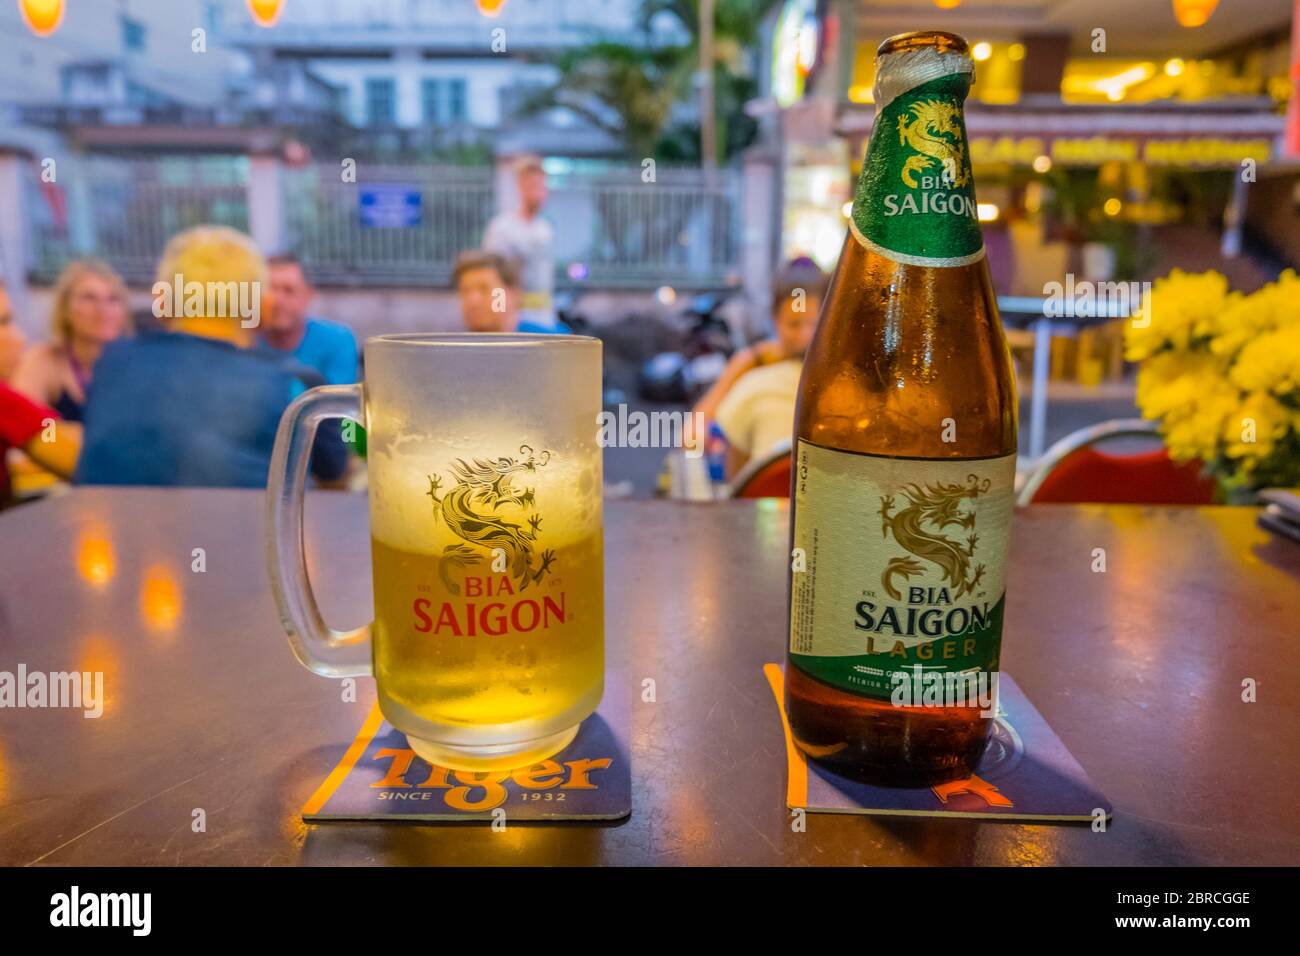 Bia Saigon, local beer, Pham Ngu Lao, Ho Chi Minh City, Vietnam, Asia Stock Photo